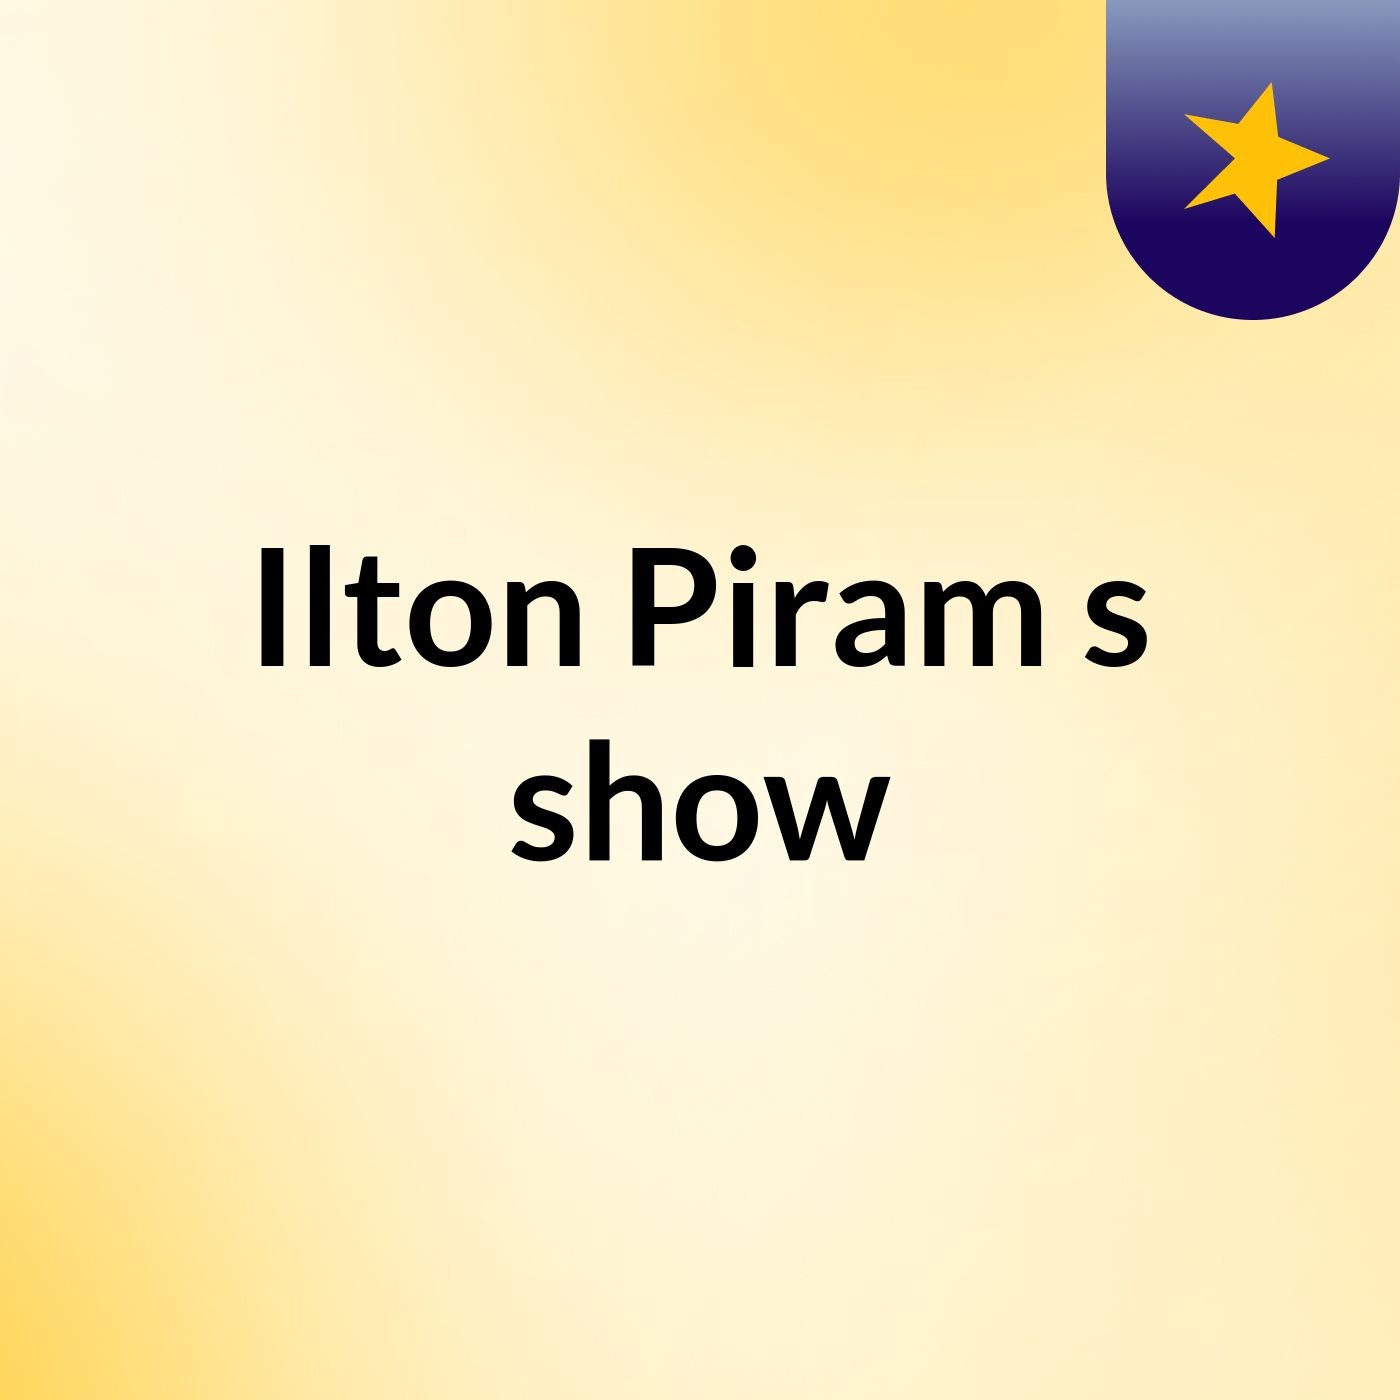 Ilton Piram's show